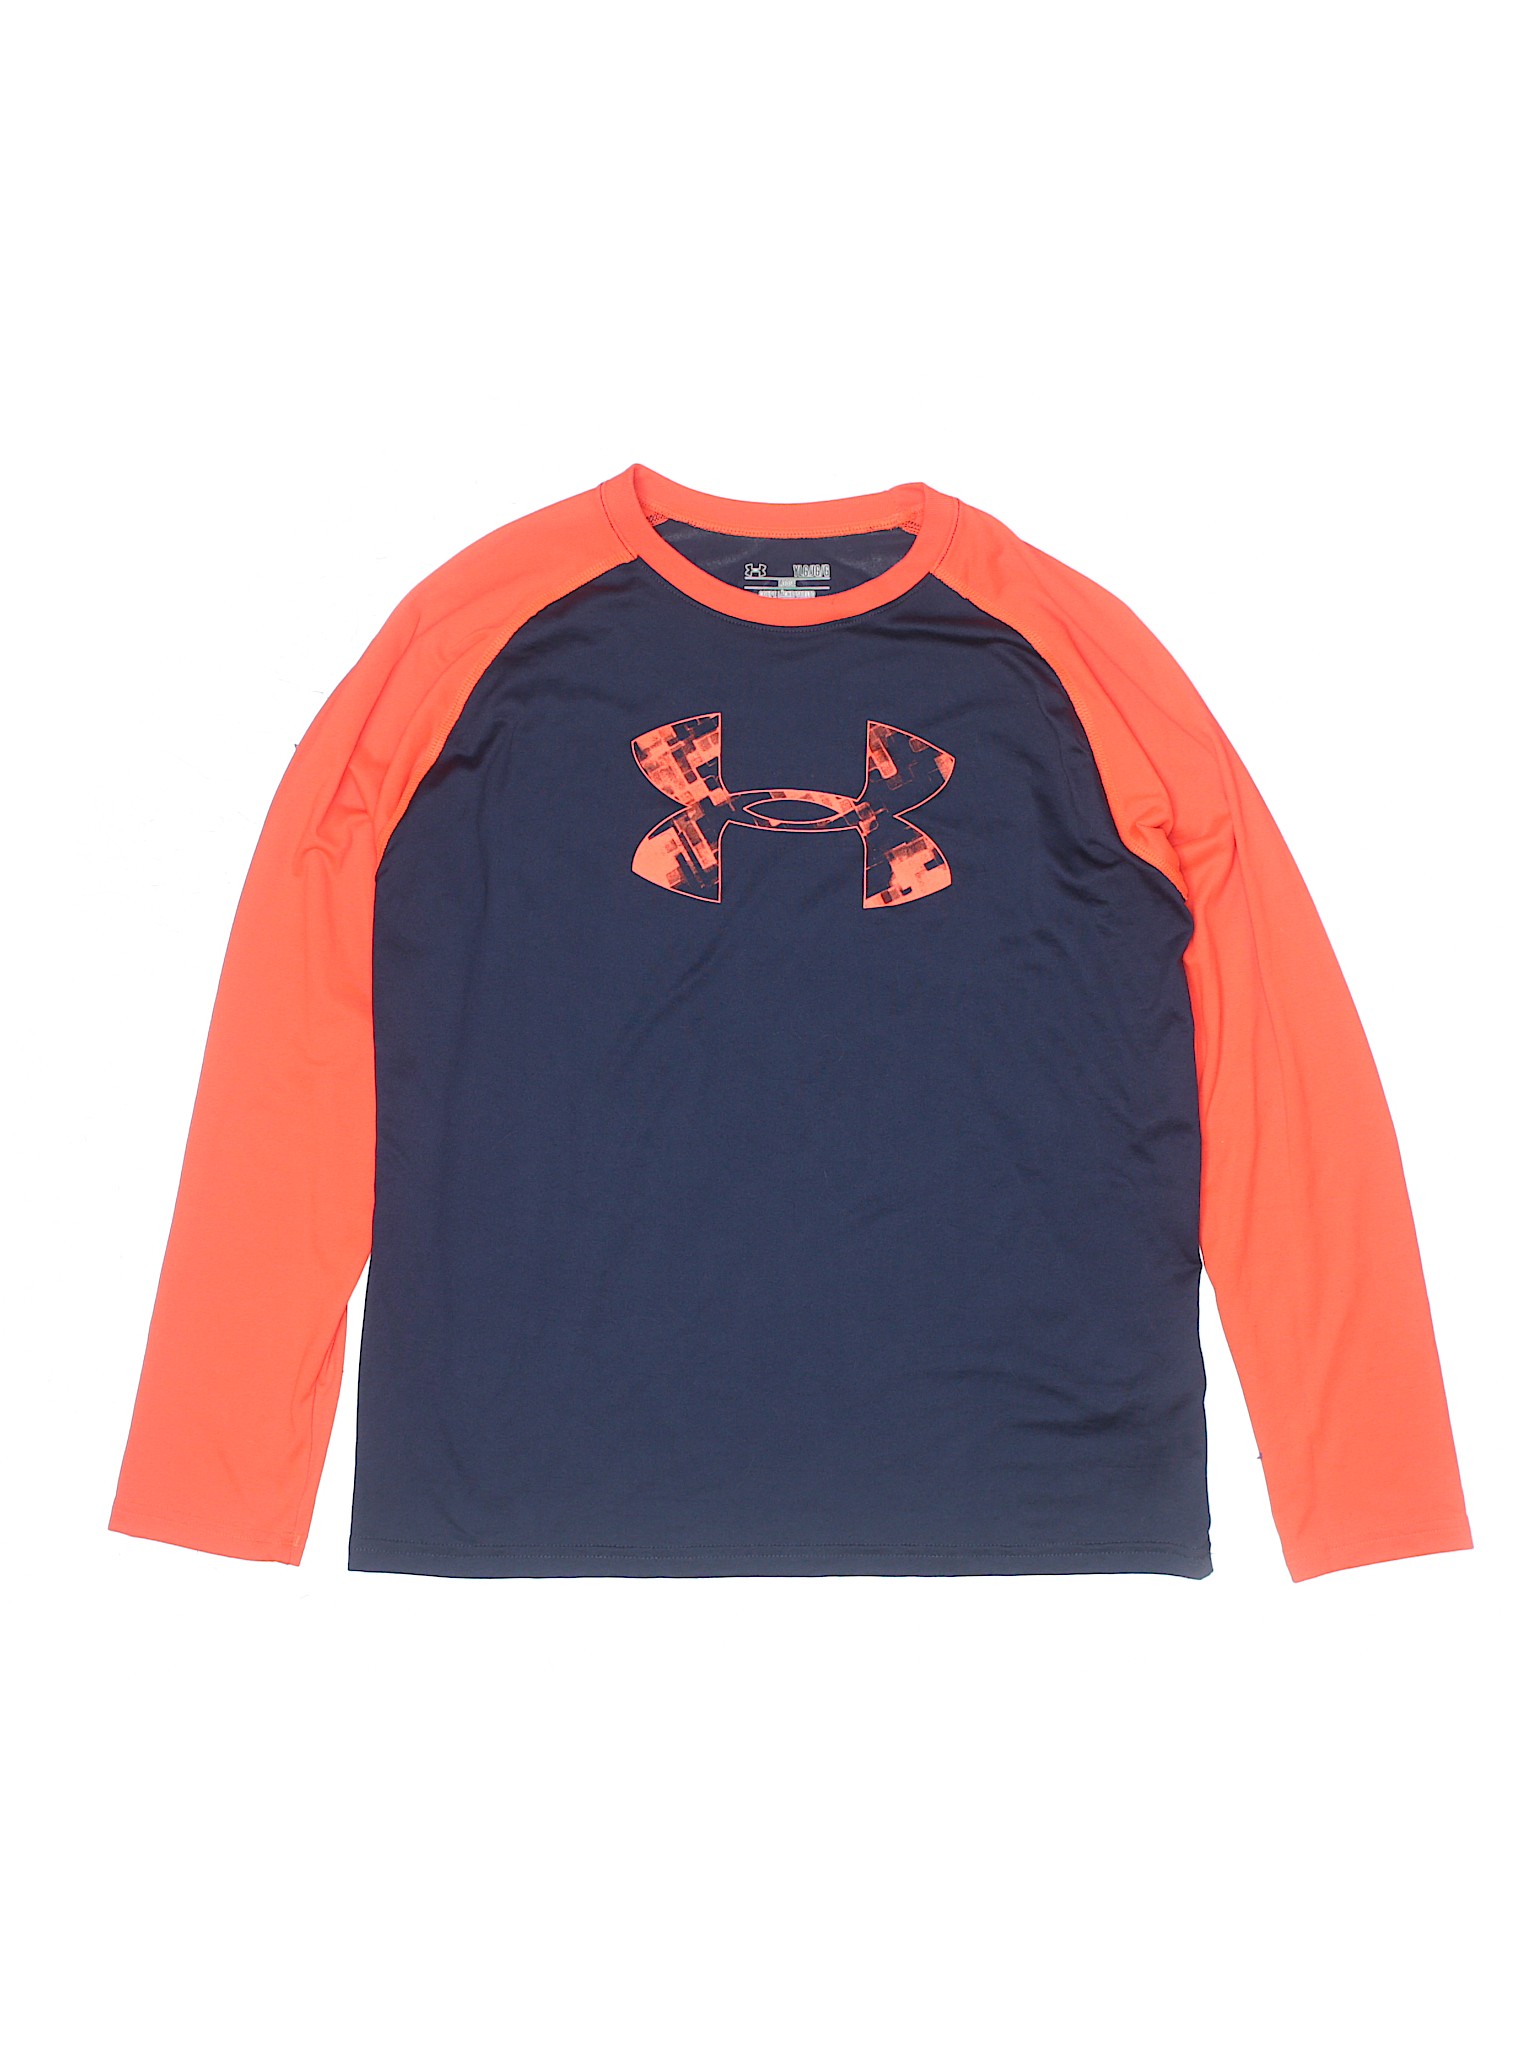 Under Armour Boys Orange Active T-Shirt L Youth | eBay